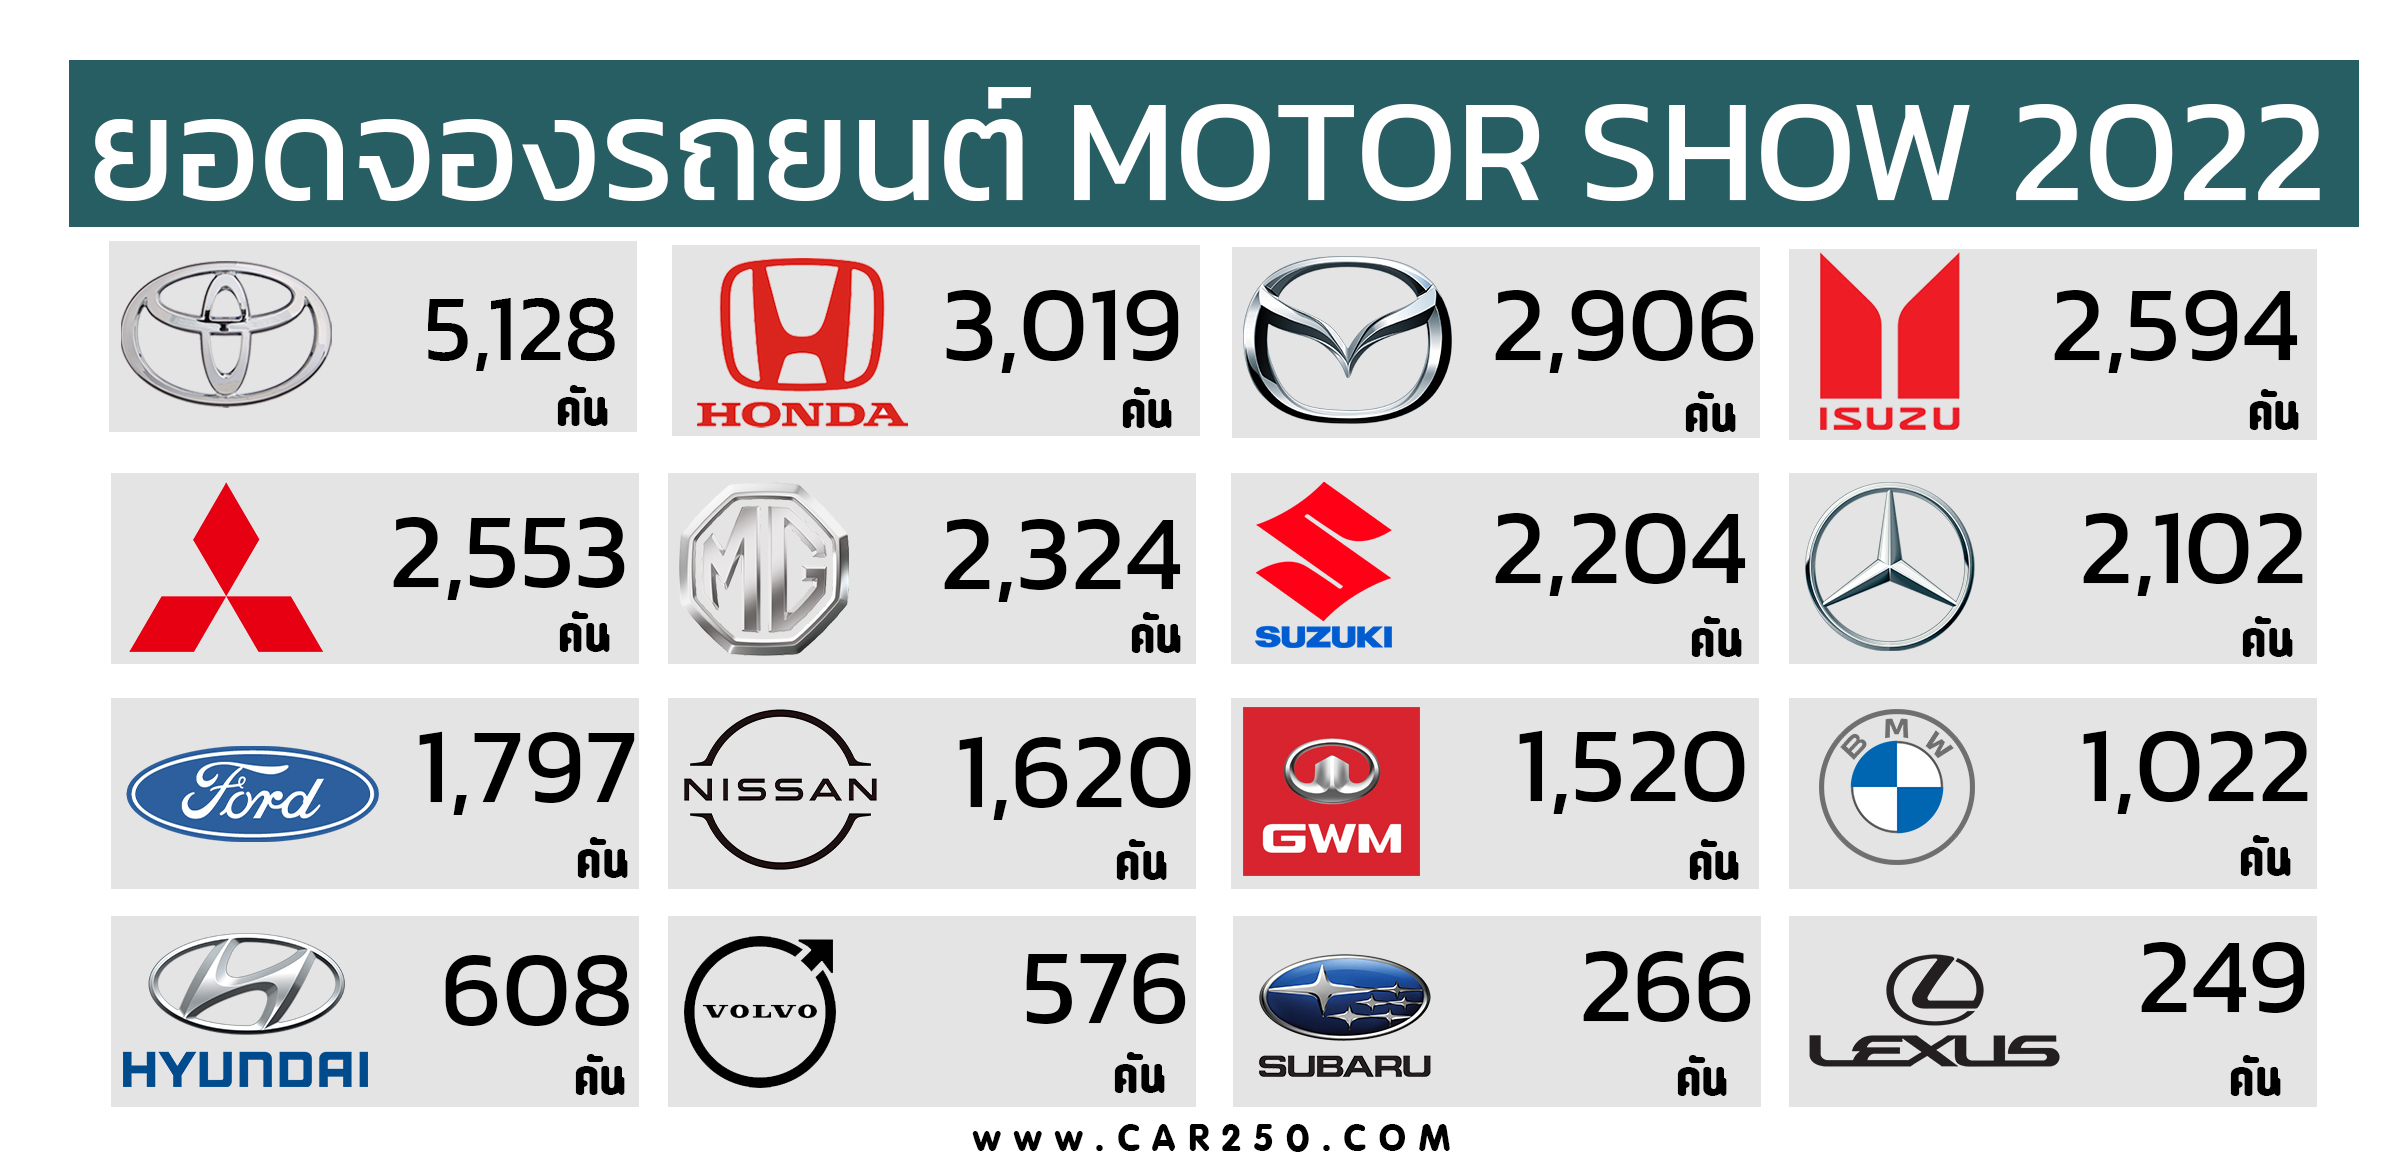 TOYOTA นำยอดจอง Motor Show 2022 รวม 31,896 คัน